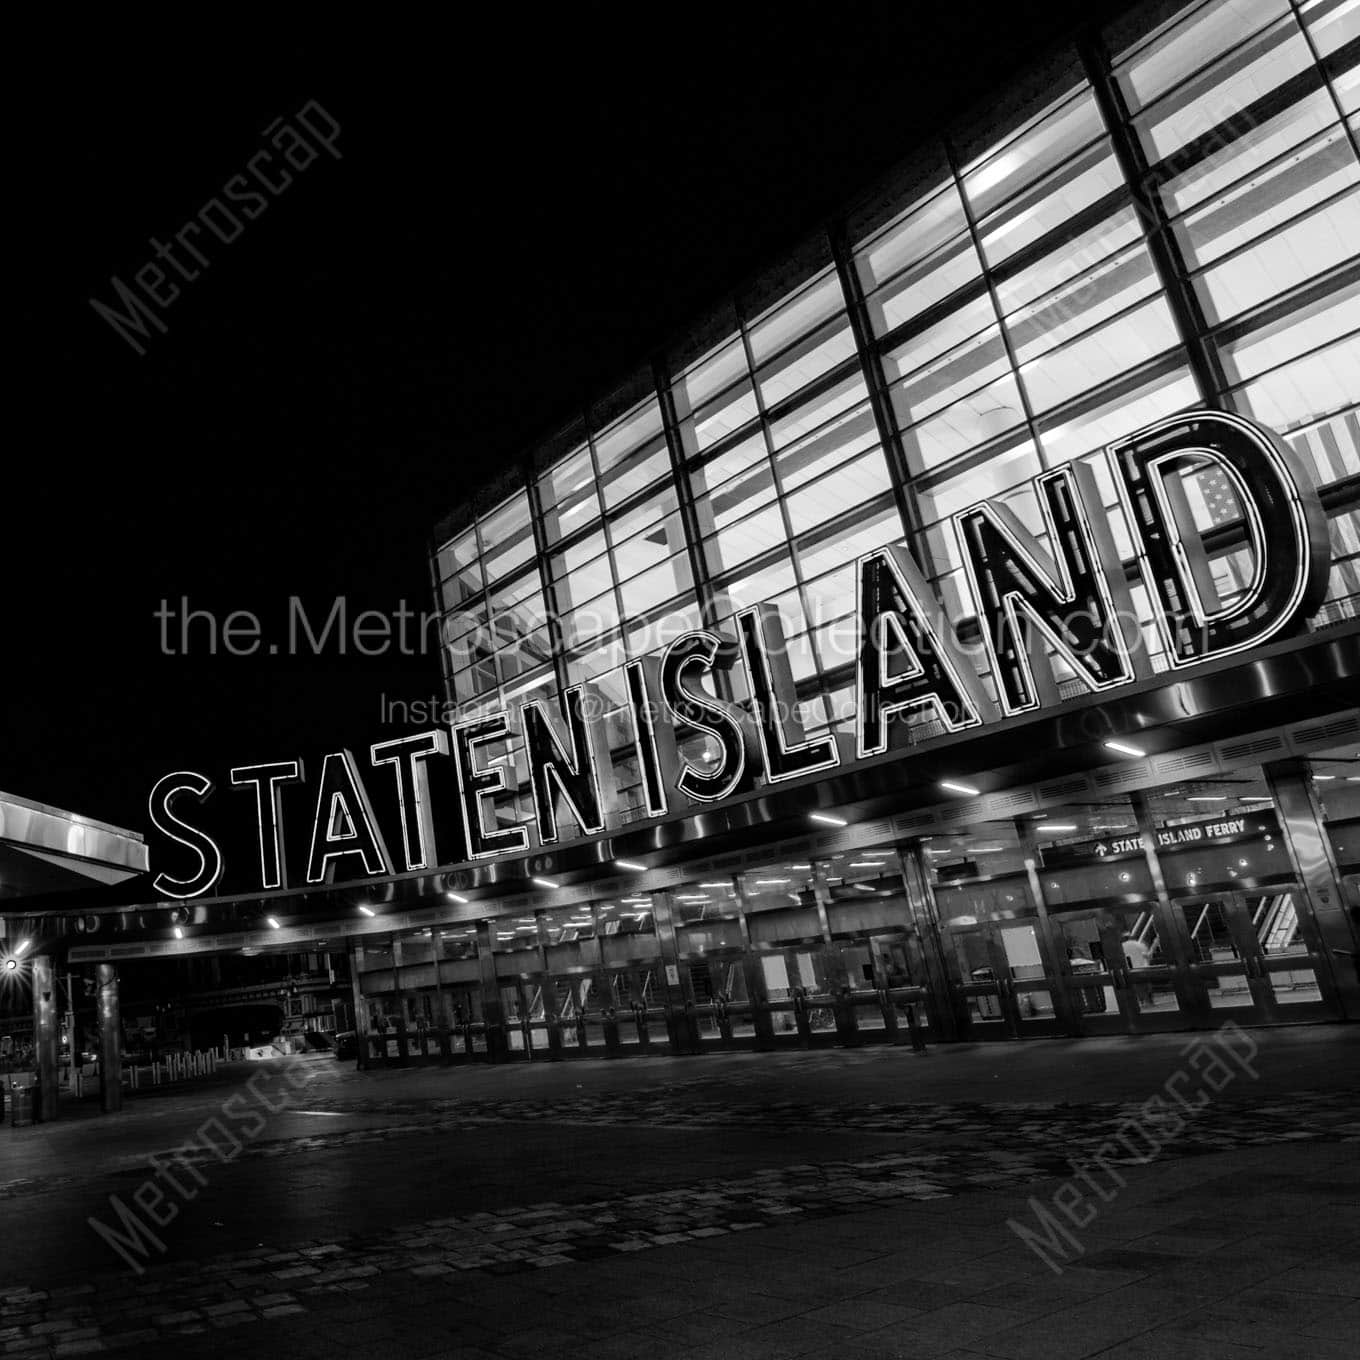 staten island ferry station Black & White Office Art